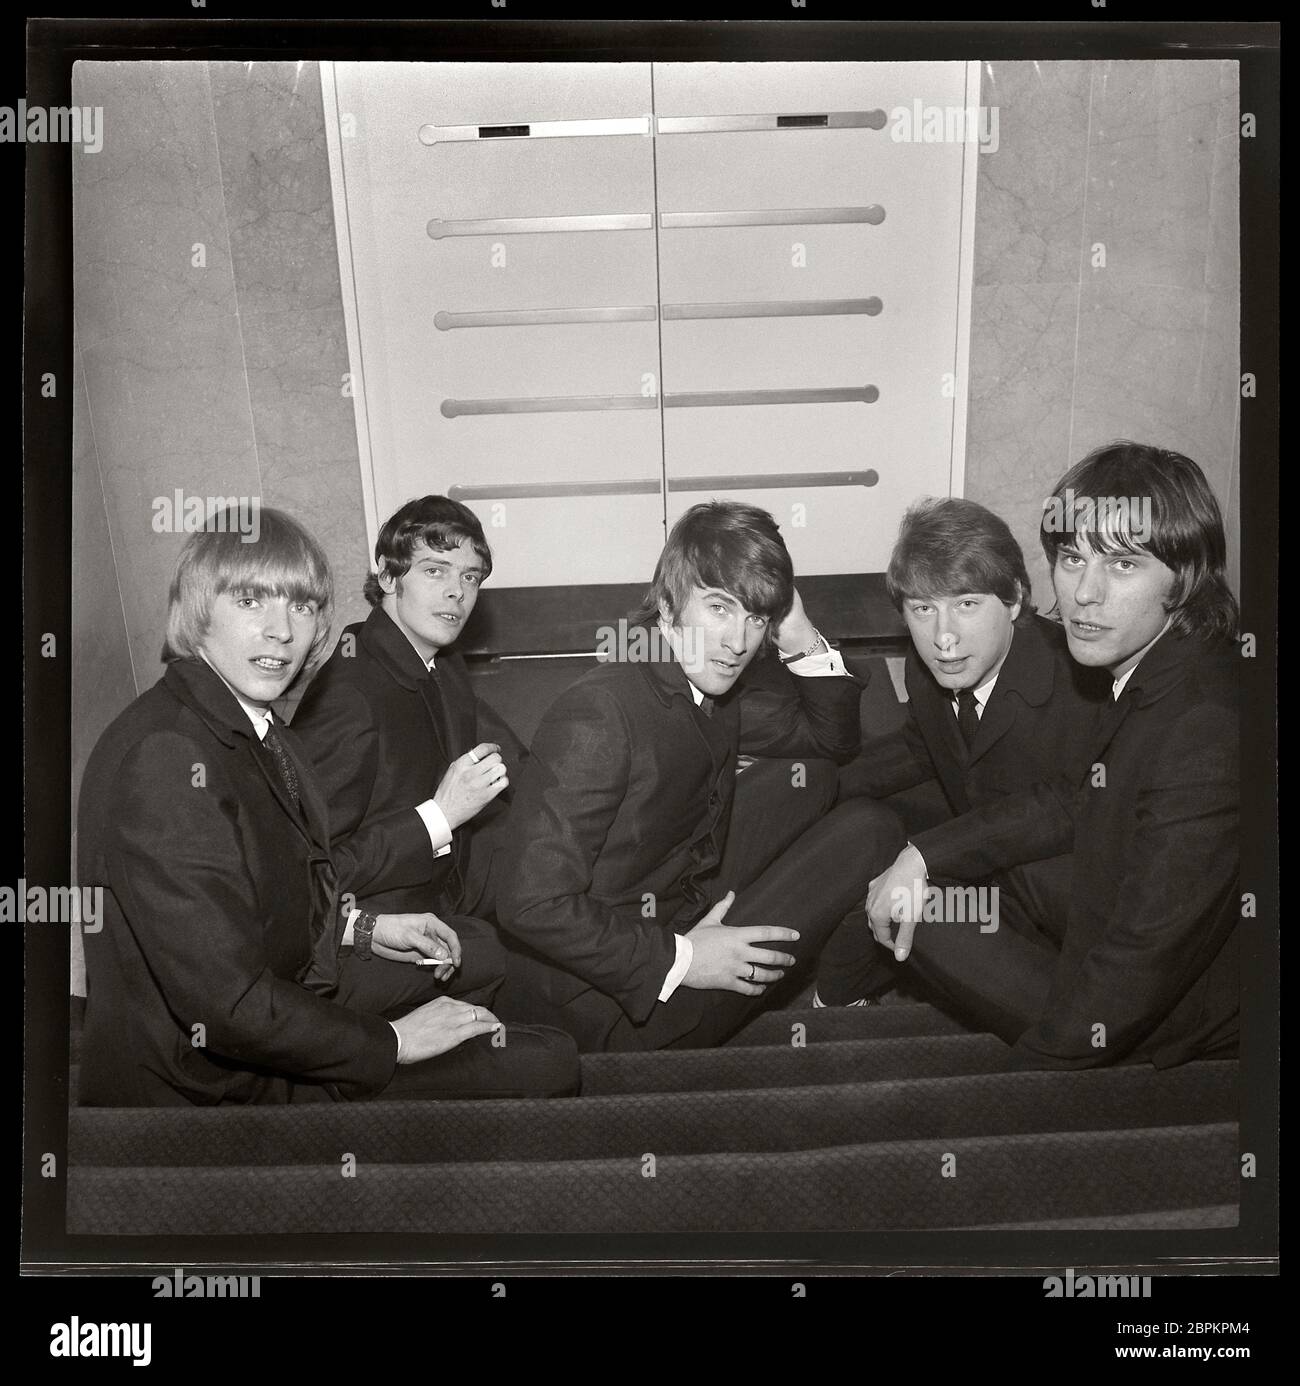 The Yardbirds in London, 26 febbraio 1966. Immagine da 6x6 cm negativo.da sinistra a destra: Voce Keith Reif, basso Paul Samwell-Smith, batteria Jim McCarty, chitarra Chris Dreja, chitarra Jeff Beck. Foto Stock